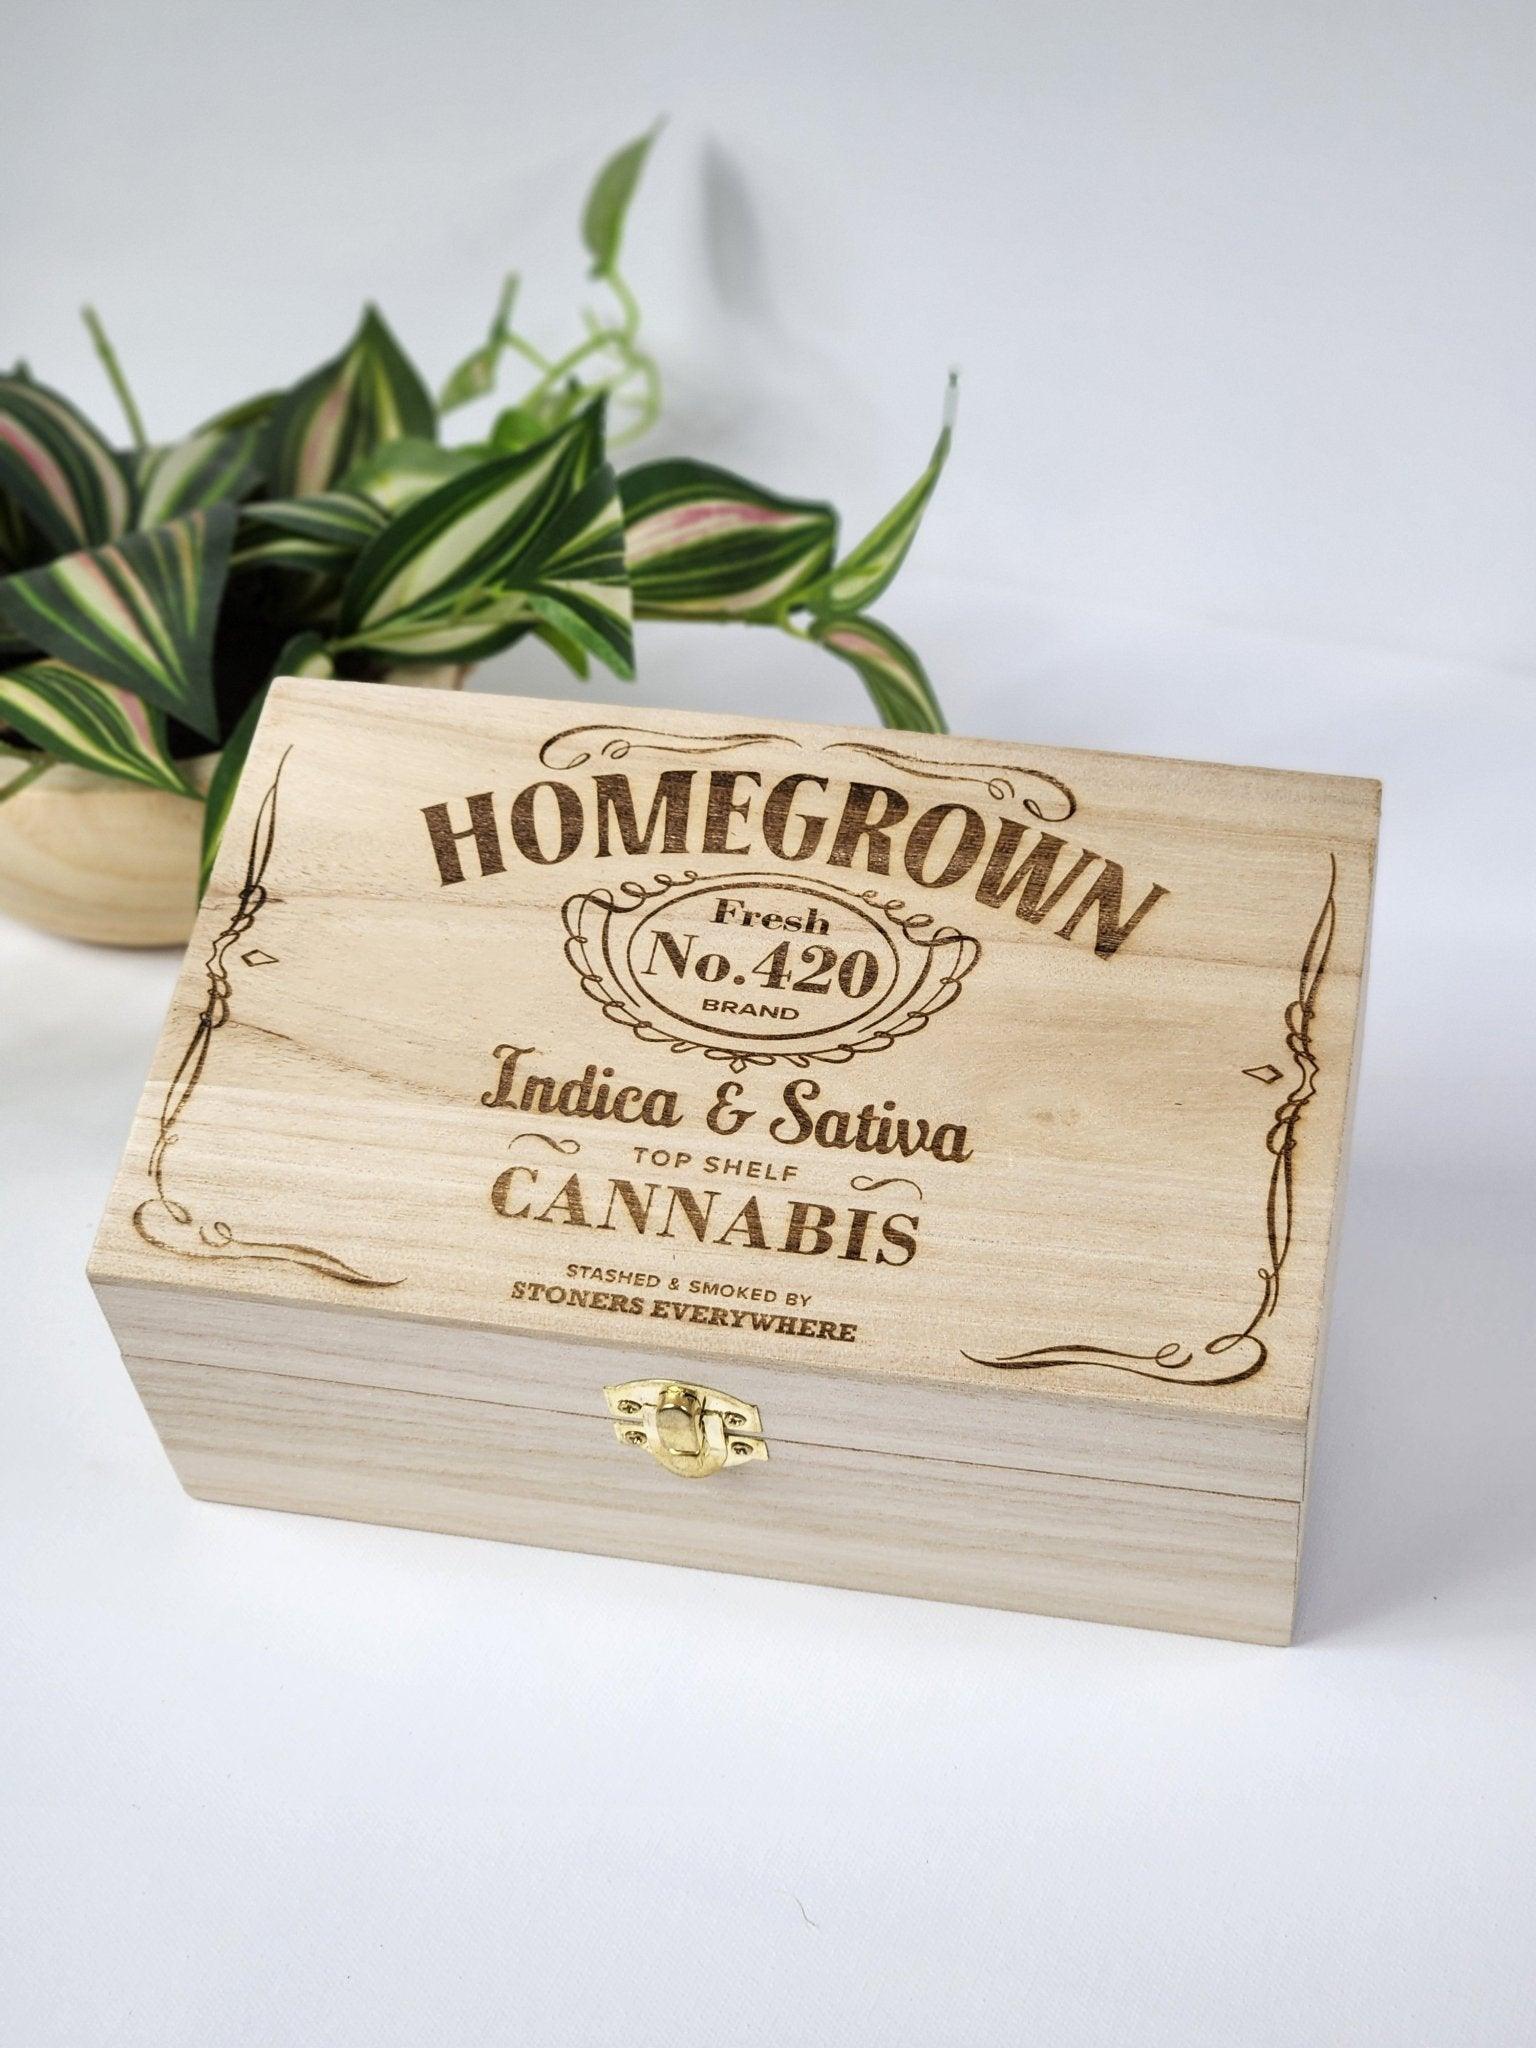 Homegrown Cannabis - The Bud Butler